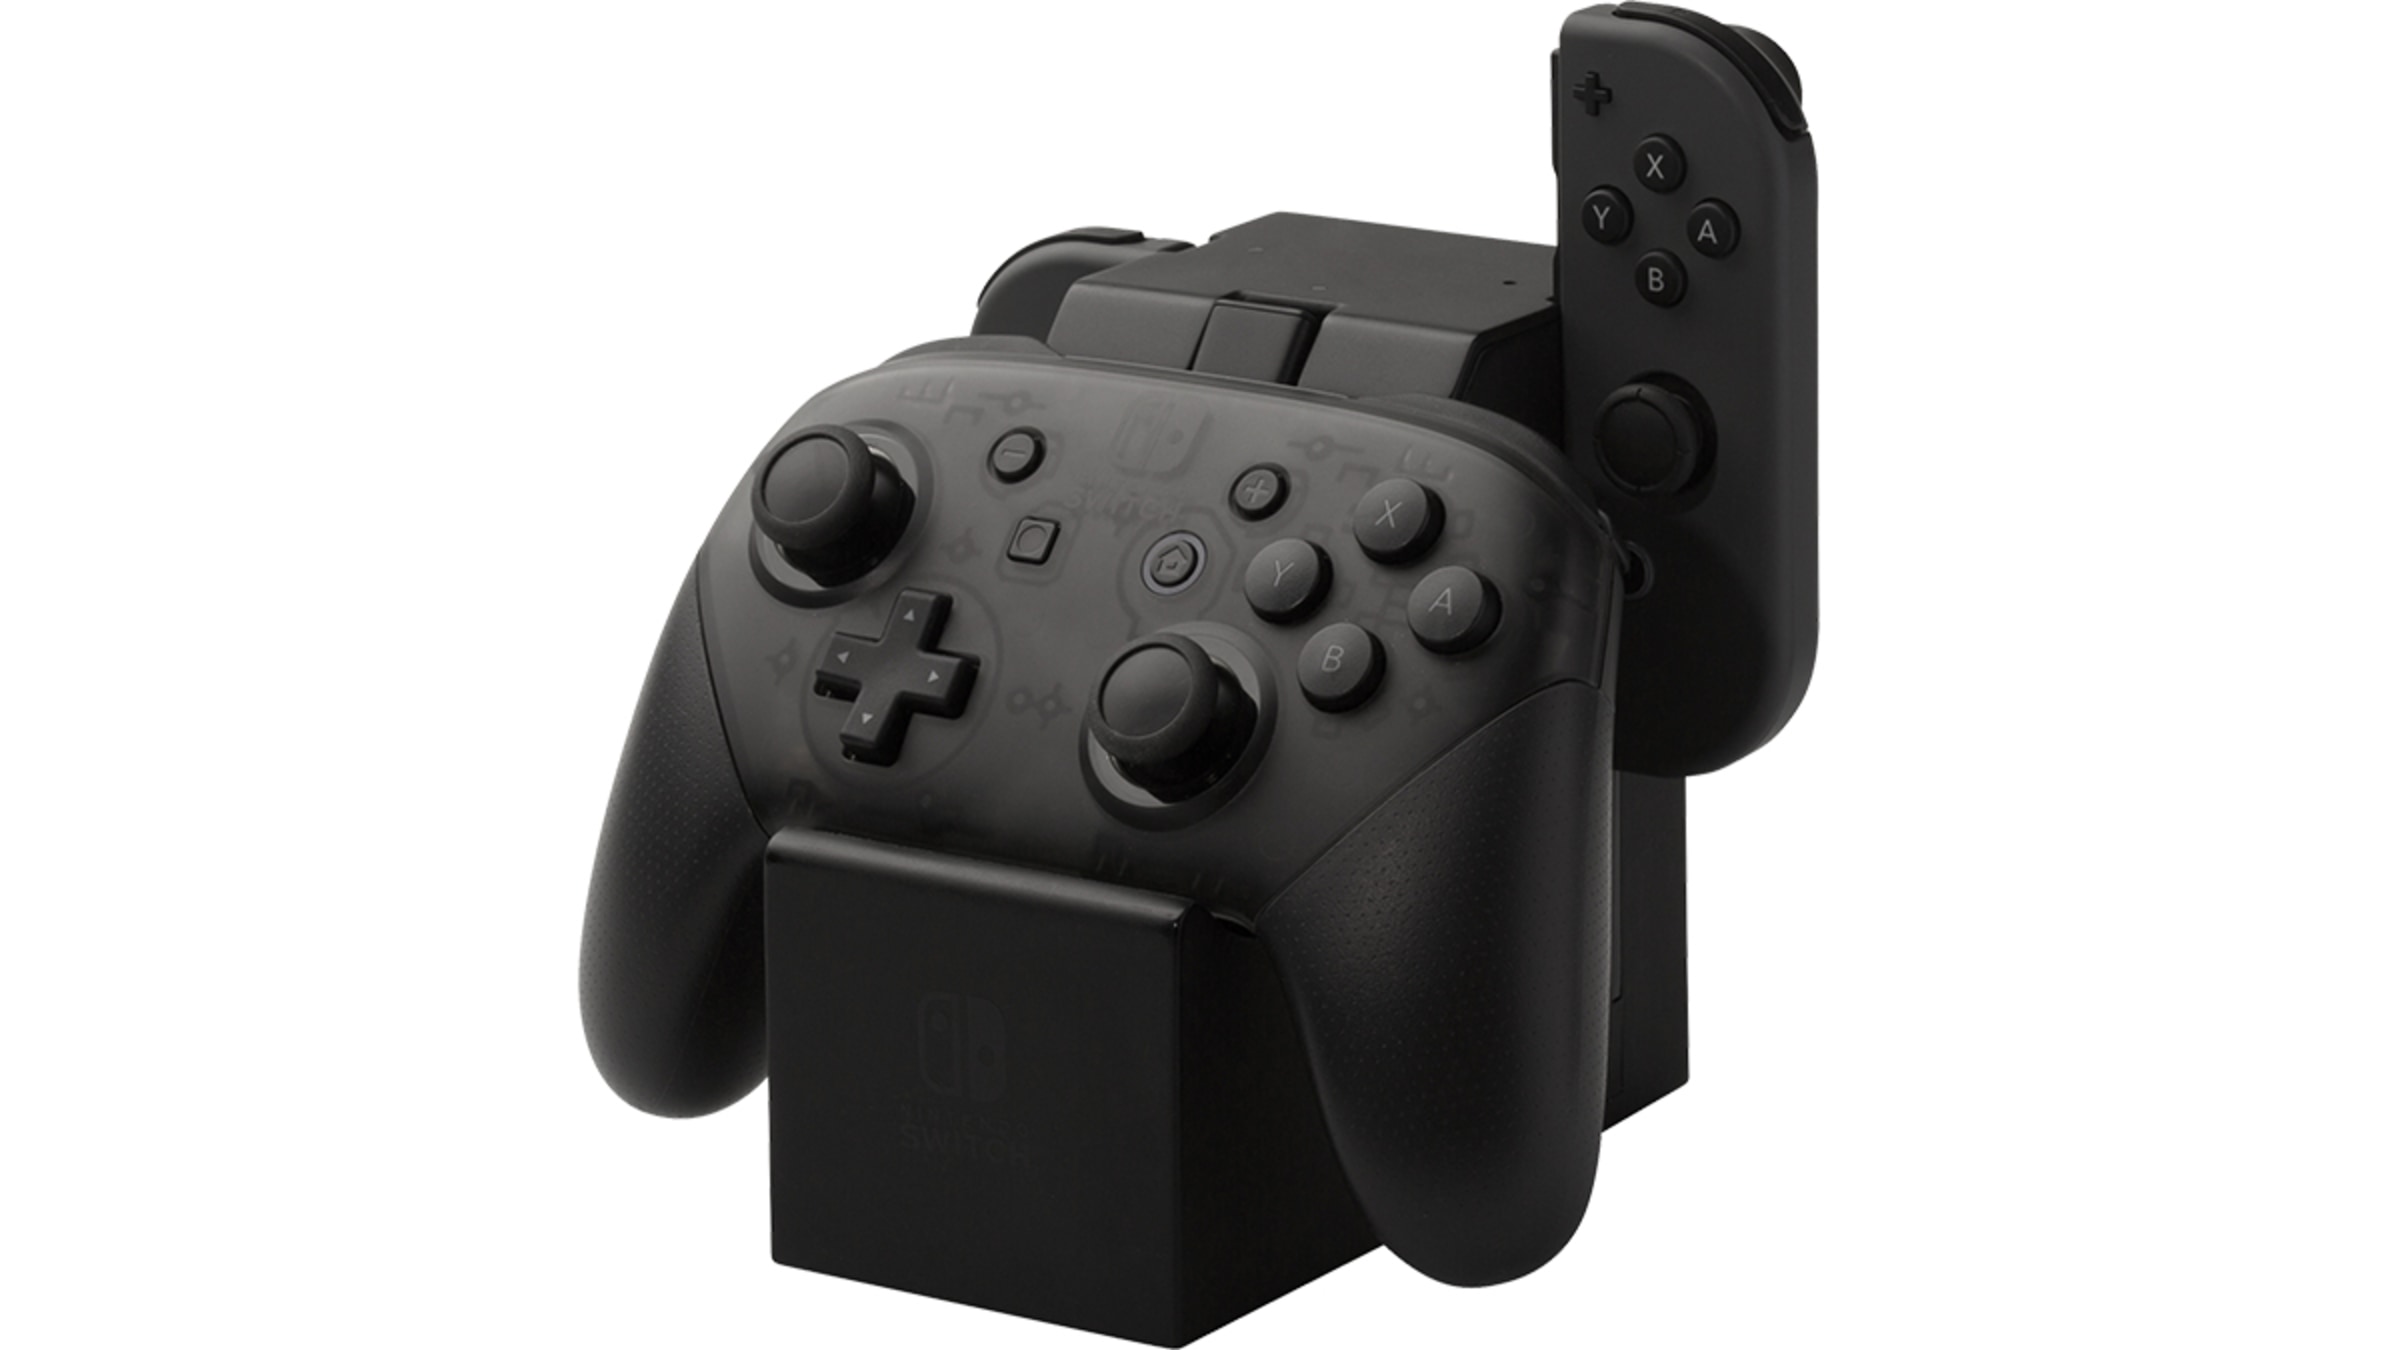 Pro Controller and Joy-Con Charging Dock - Hardware - Nintendo - Nintendo  Official Site